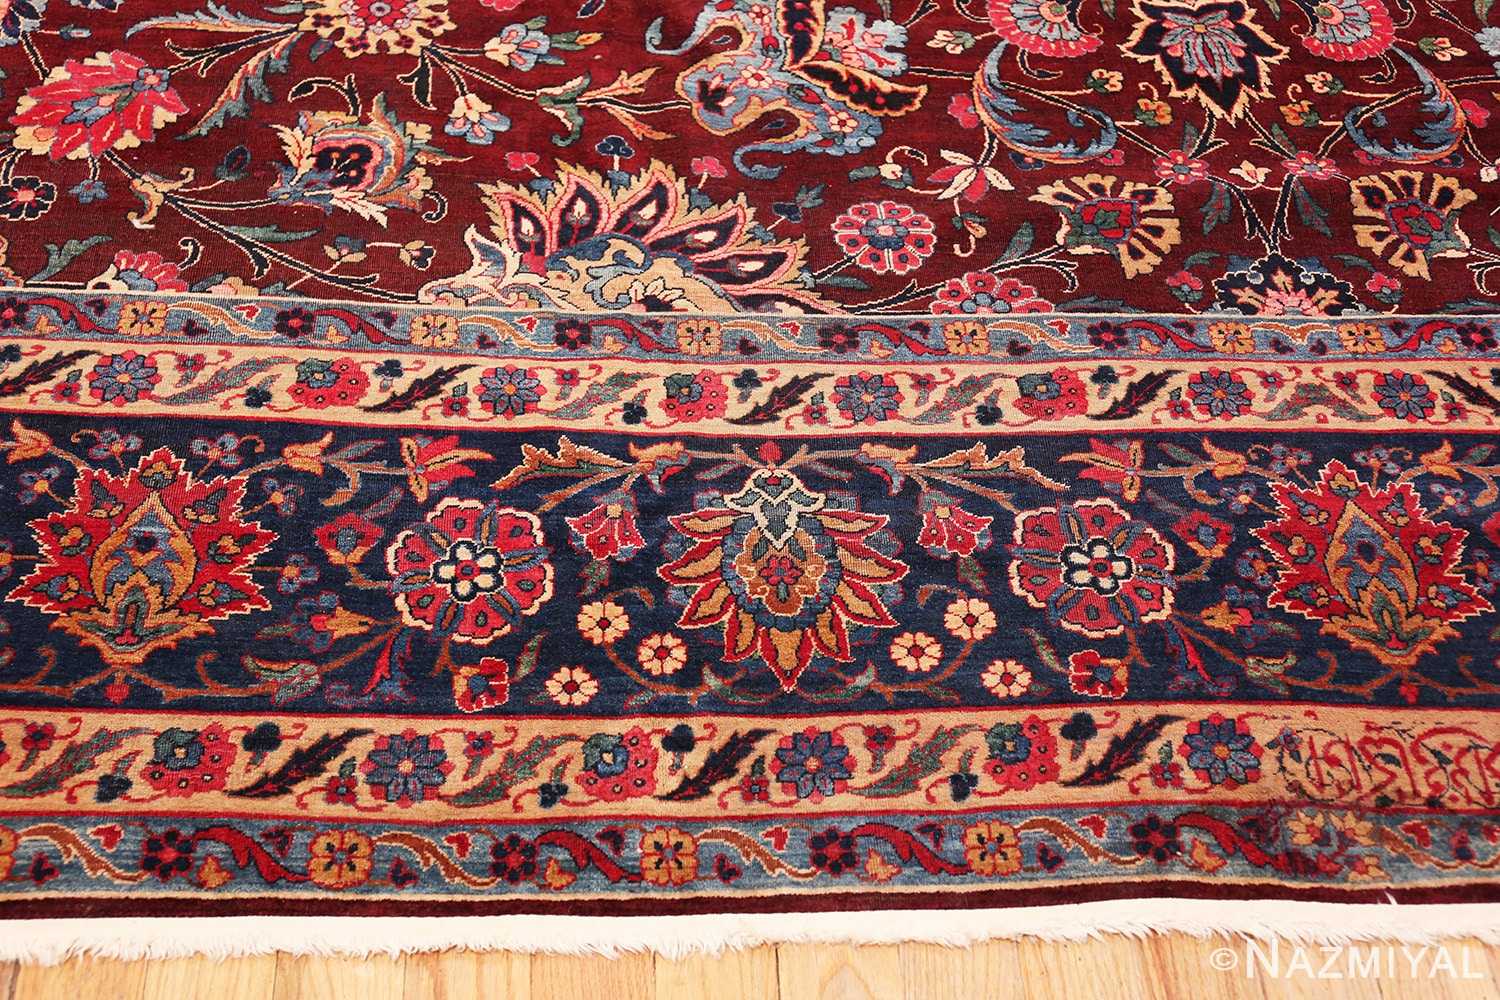 Border Aubergine Antique Persian Kerman rug 44830 by Nazmiyal